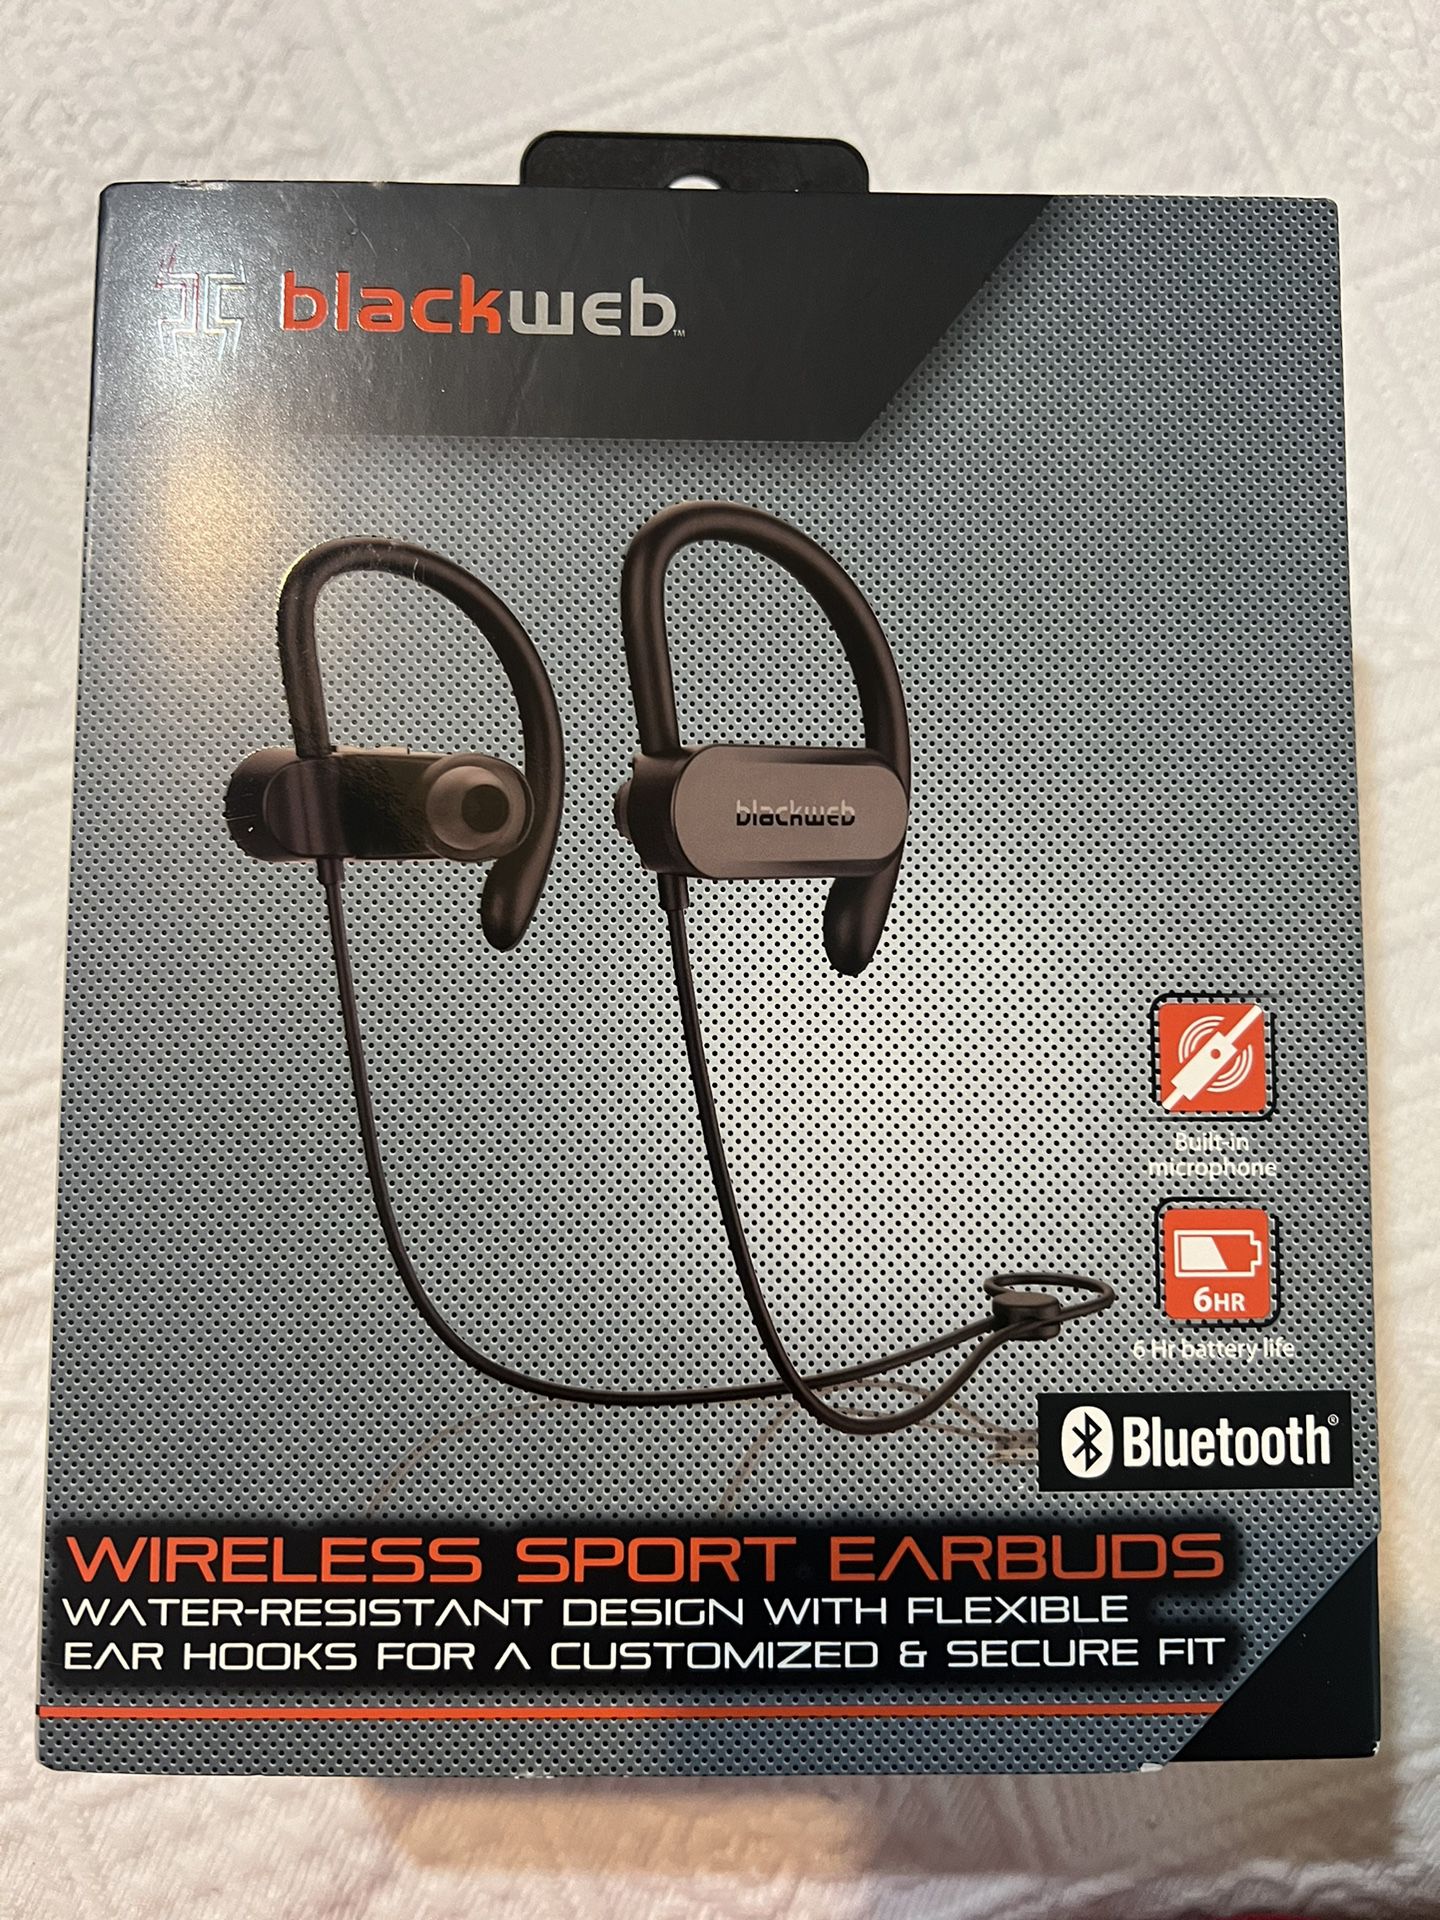 Blackweb Bluetooth Wireless Earbuds